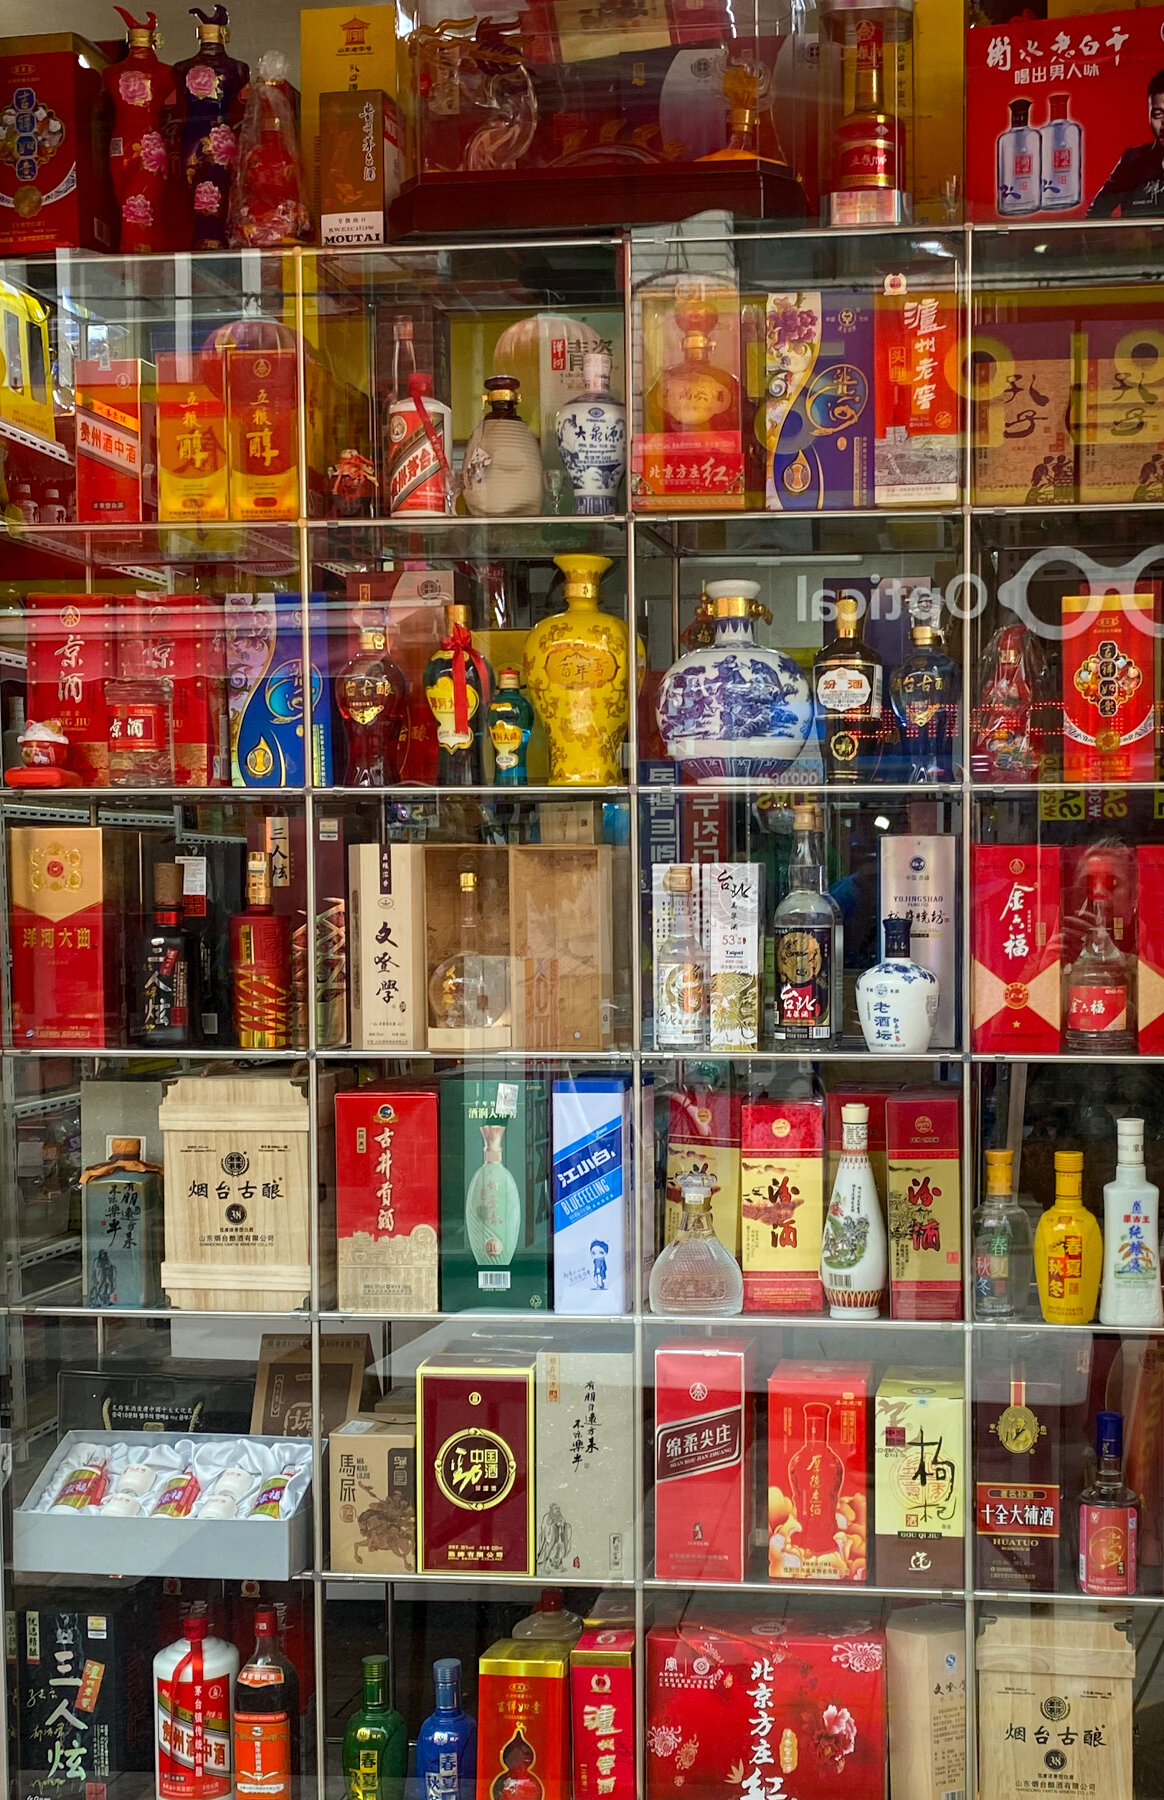 Liquor Bottles in a Chinatown window